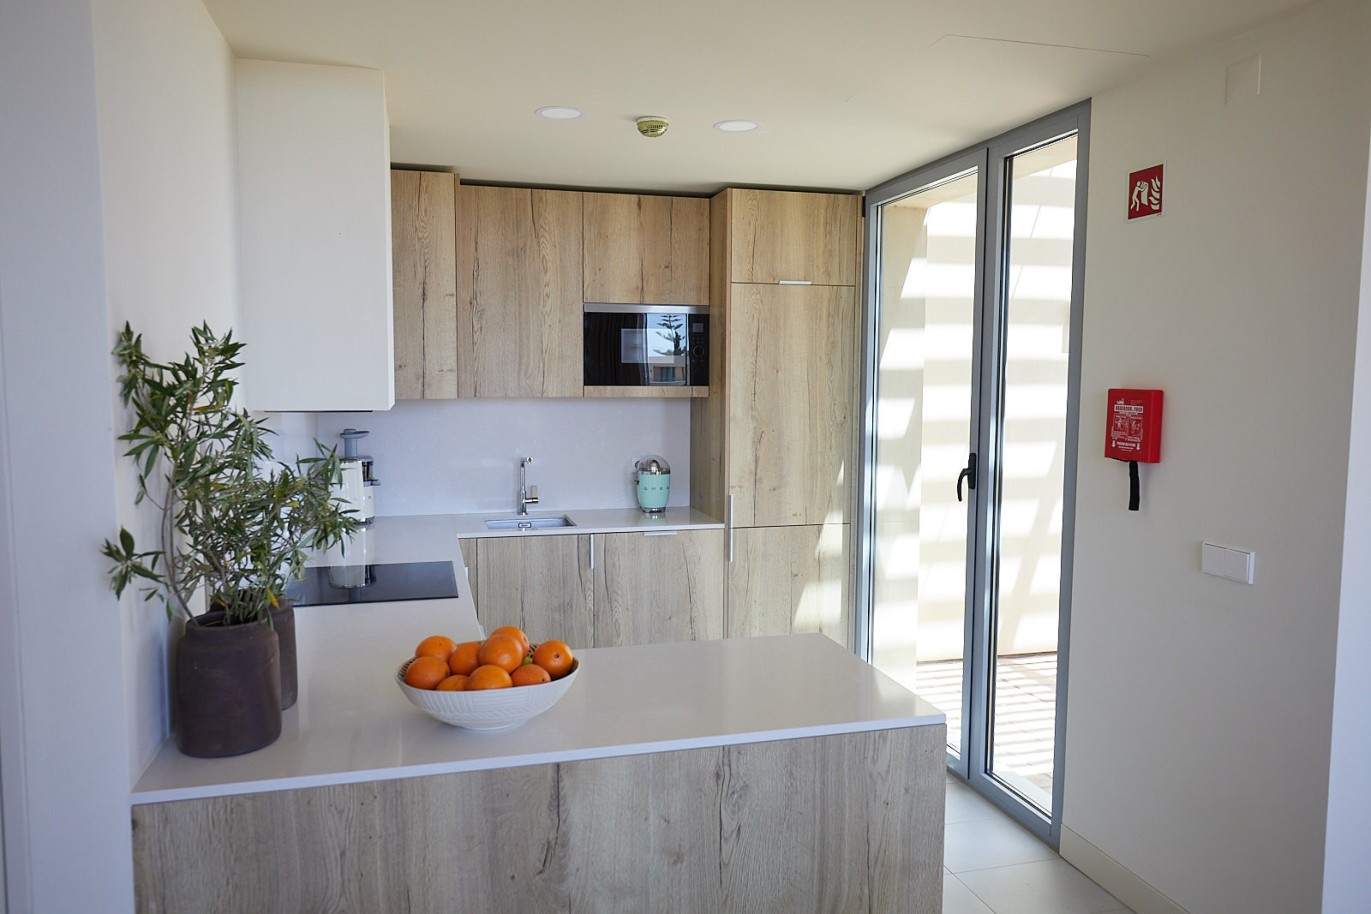 3 bedroom apartment in resort, for sale in Porches, Algarve_230748